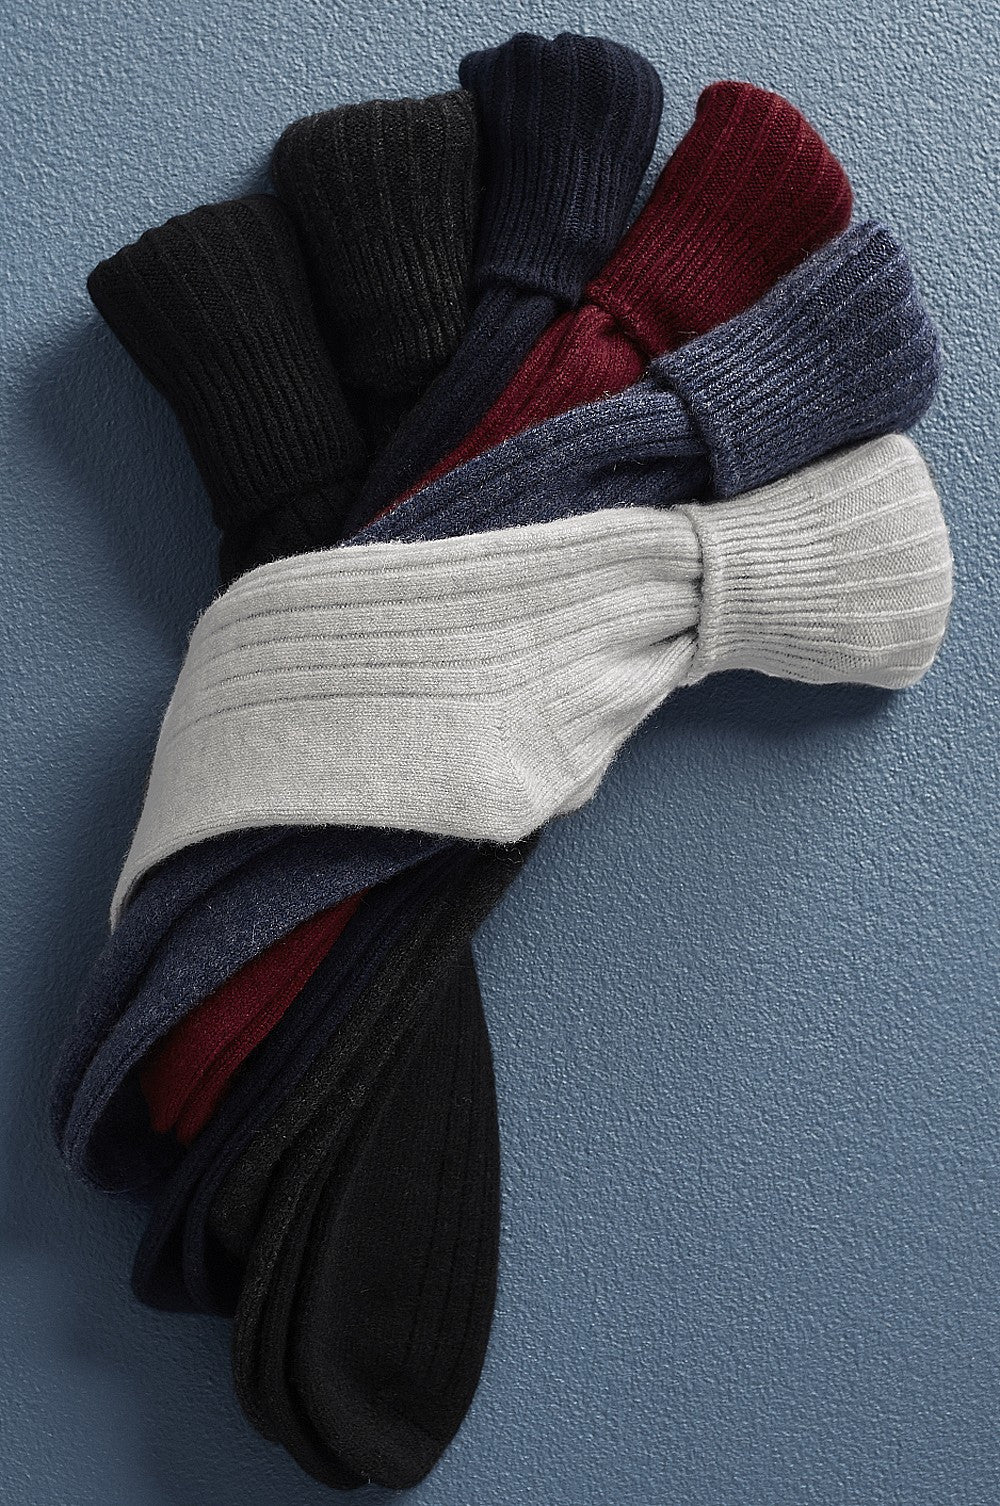 Men's Cashmere Socks